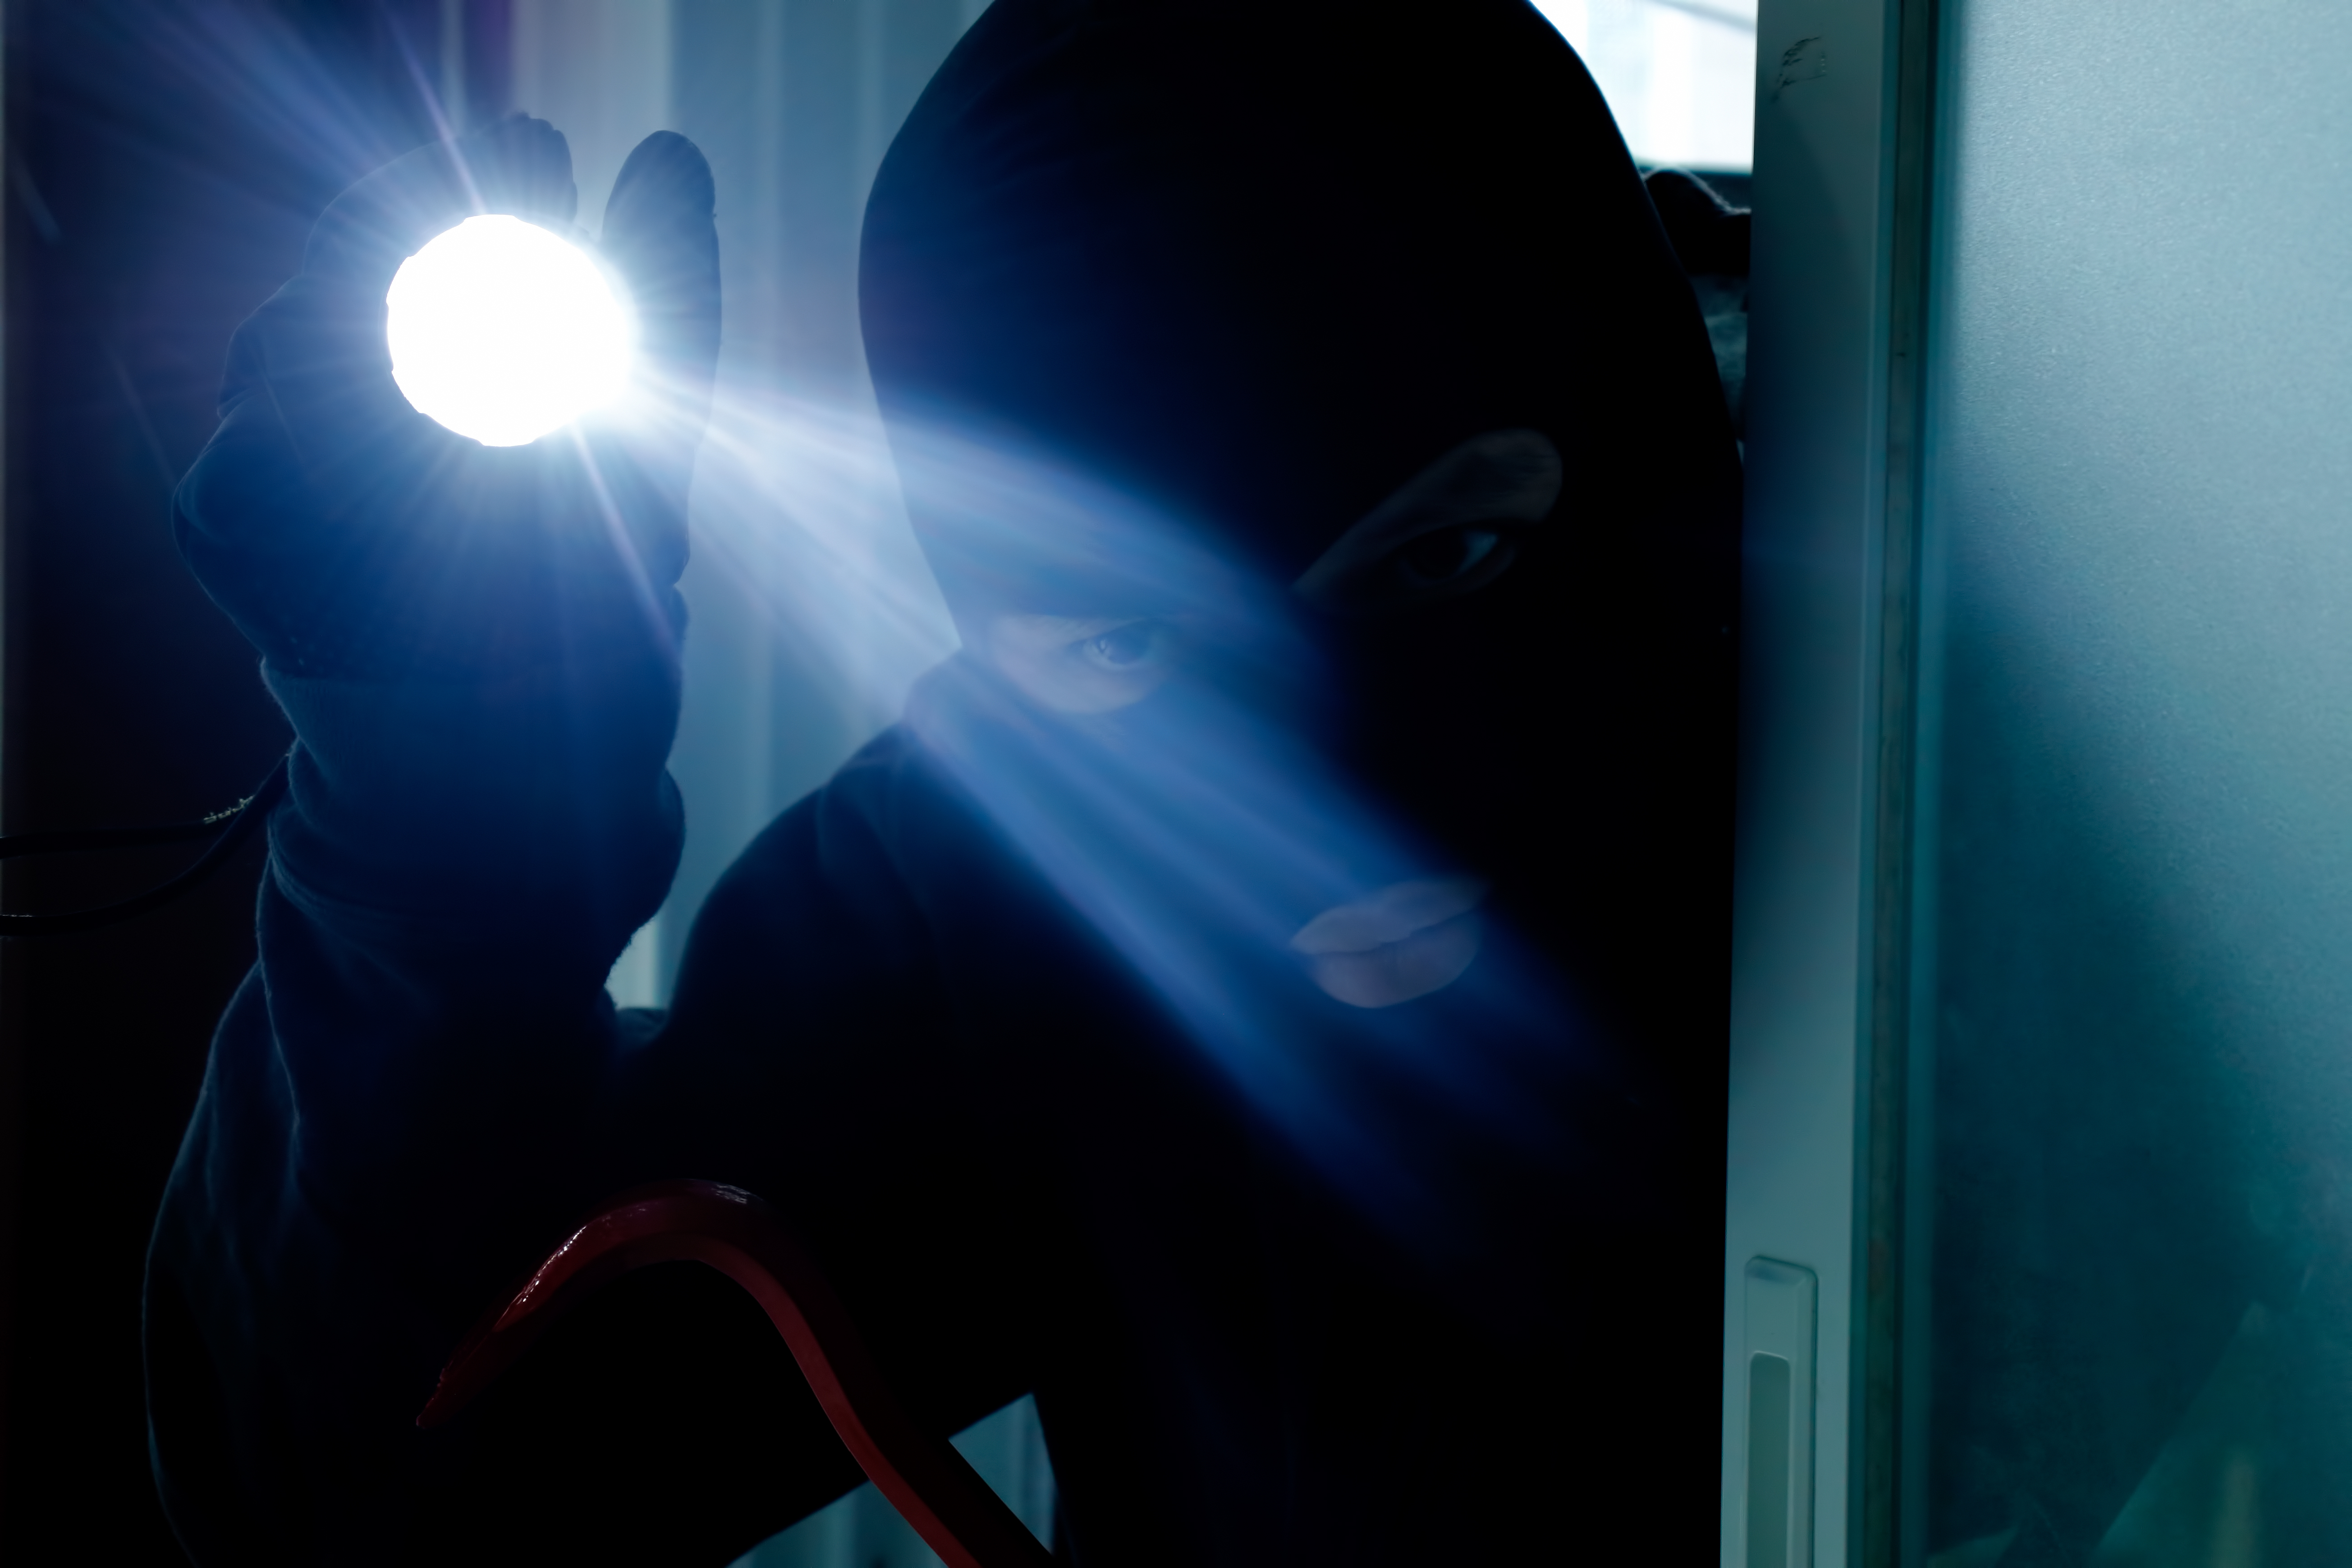 Masked burglar holding flashlight while secretly entering into a house | Source: Getty Images